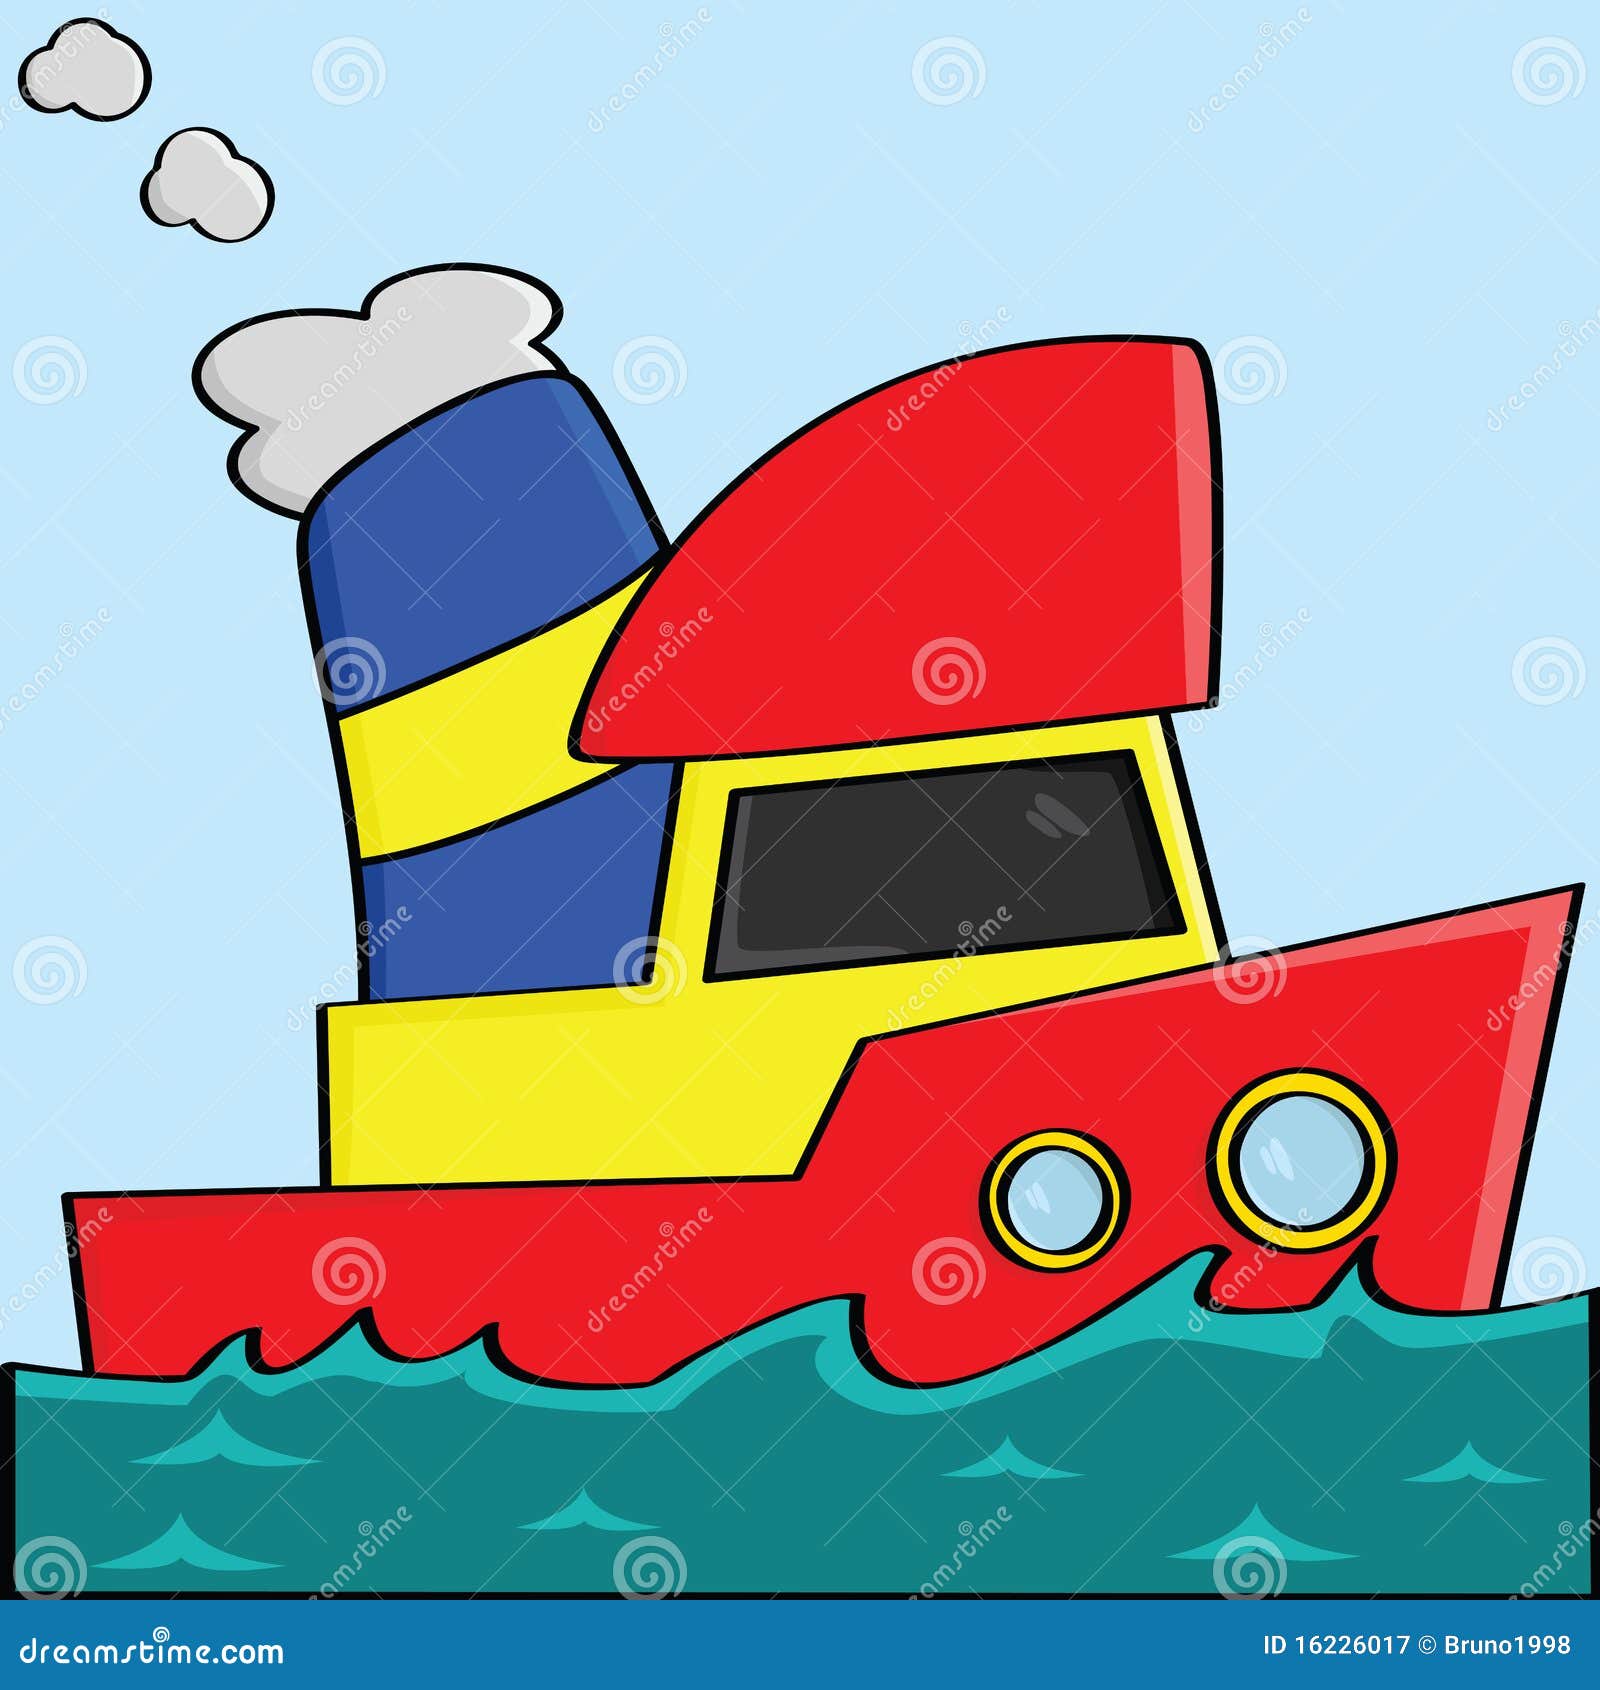 Cartoon Boat